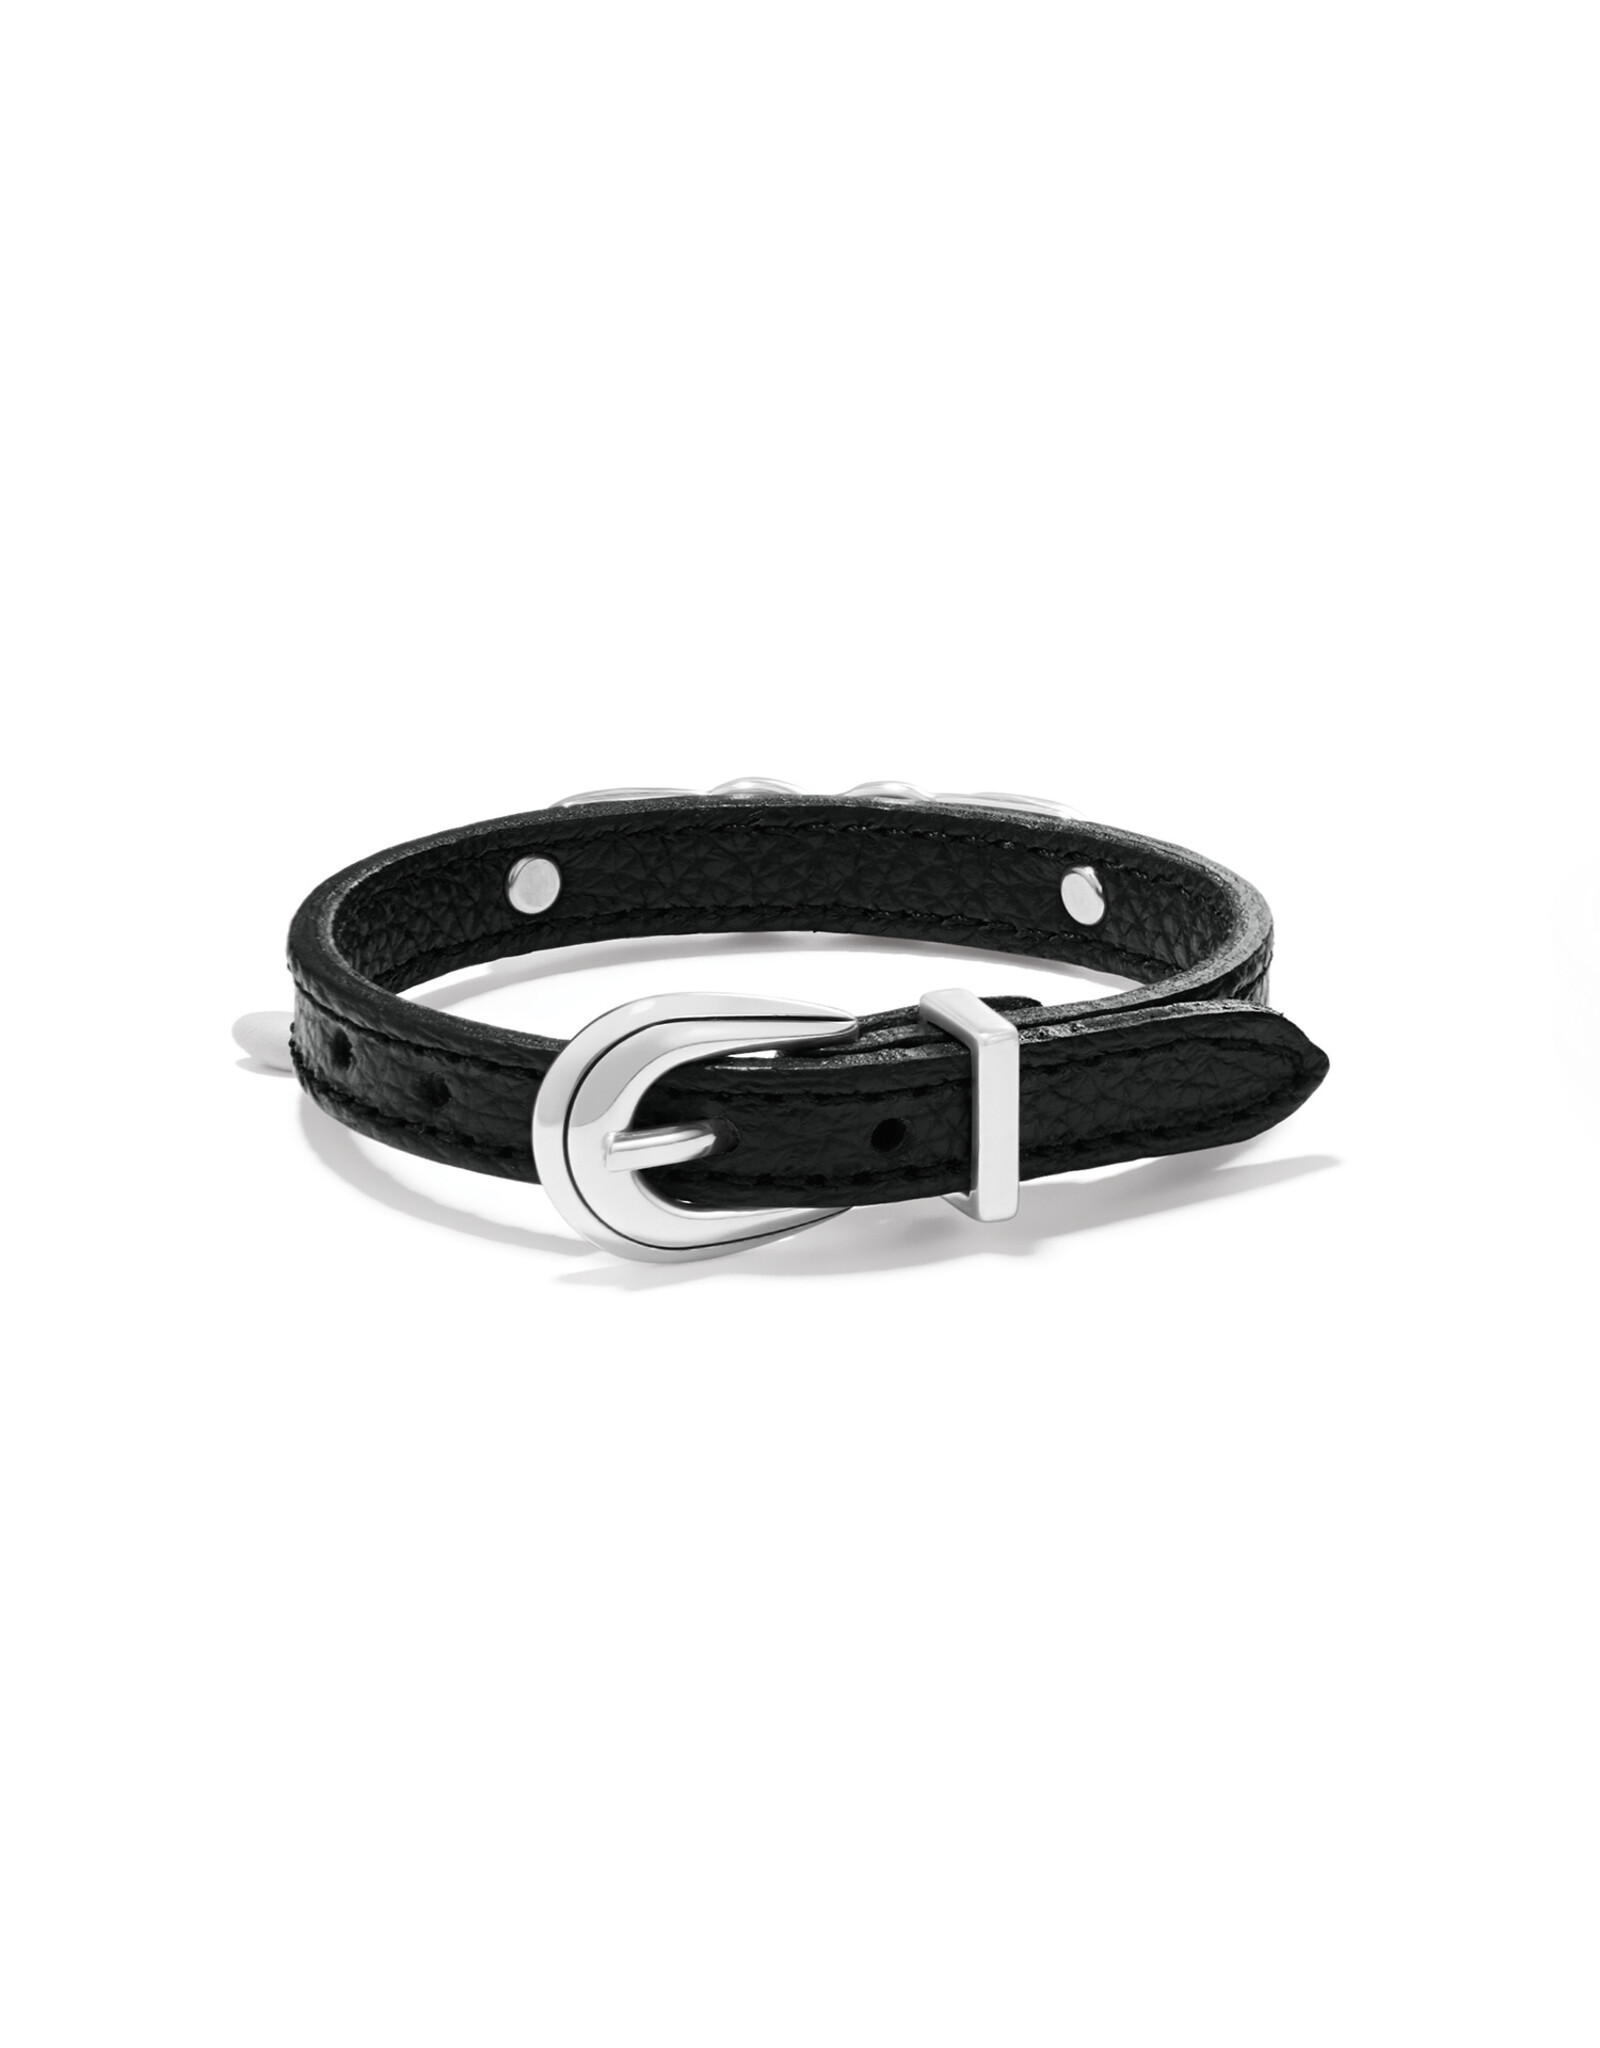 Brighton Brighton JF0119 Interlok Braid Black Leather Bracelet